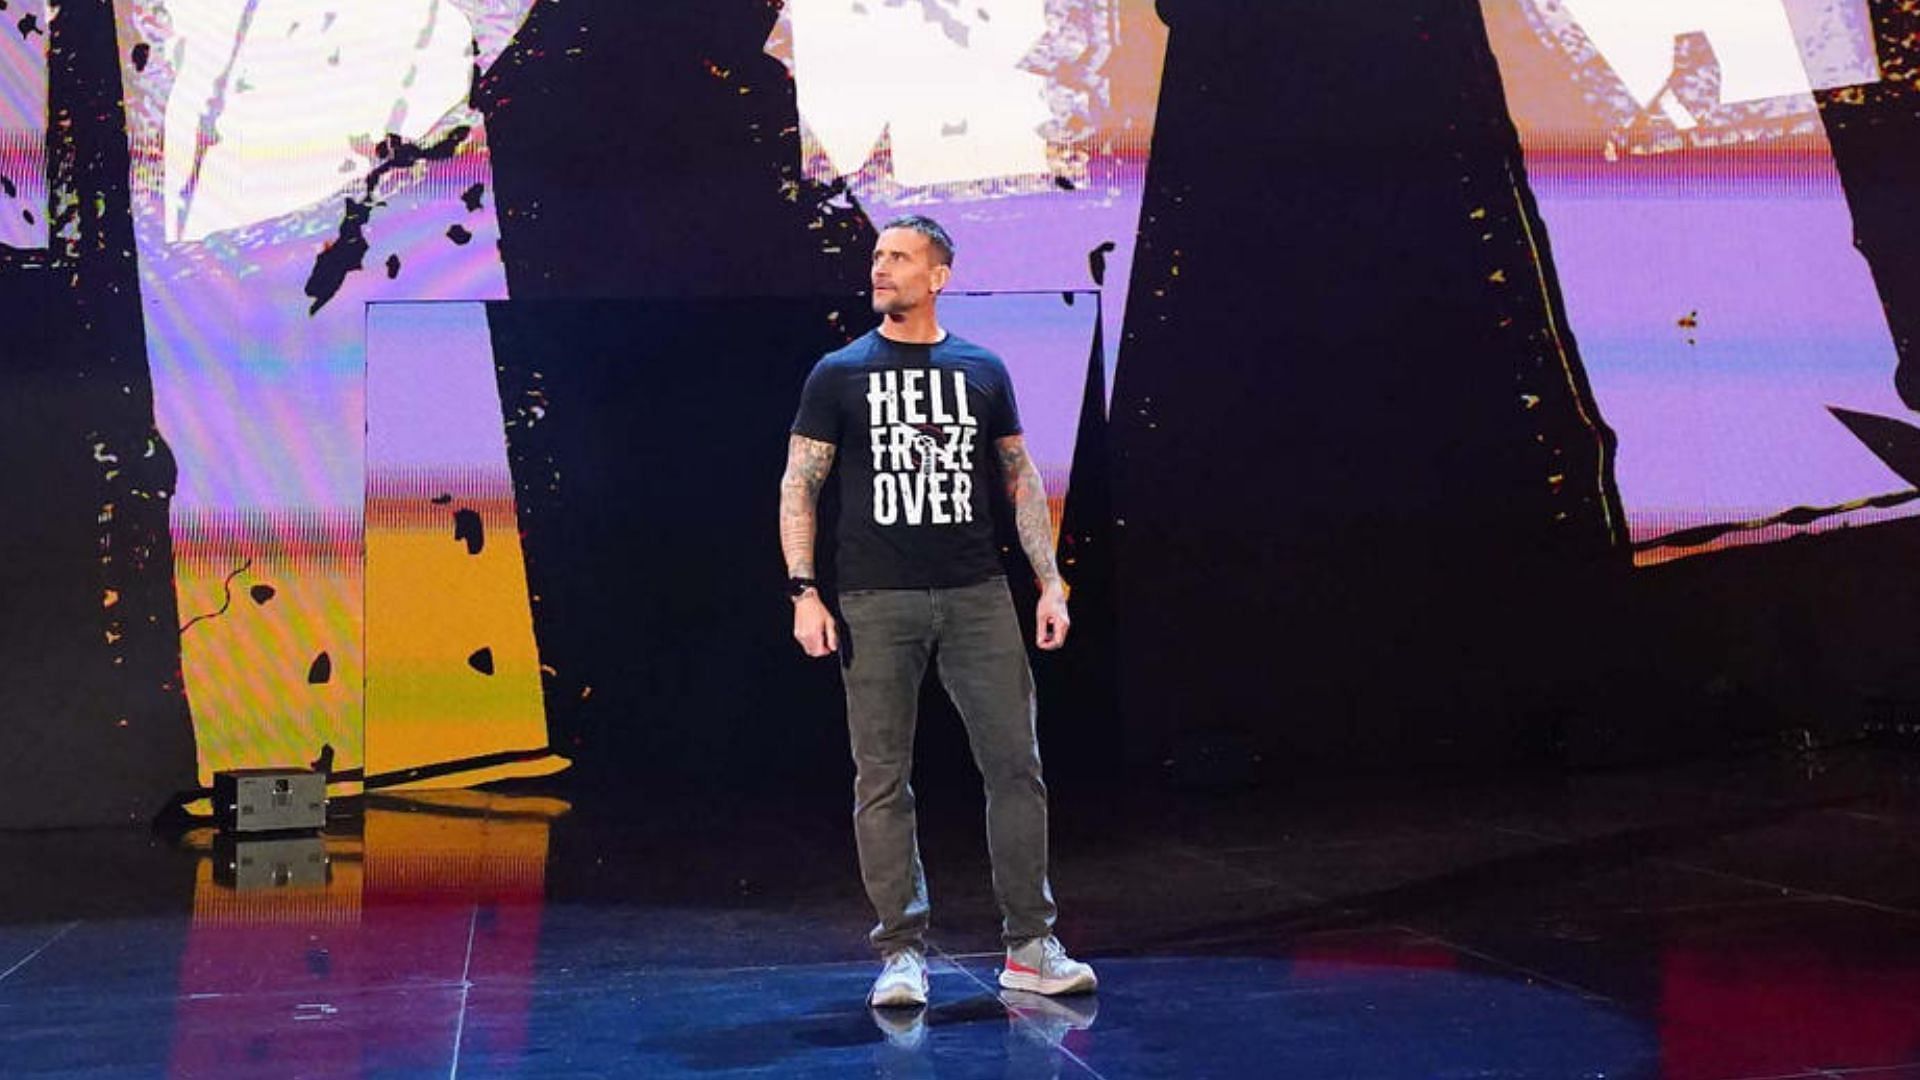 CM Punk made his return to WWE at Survivor Series